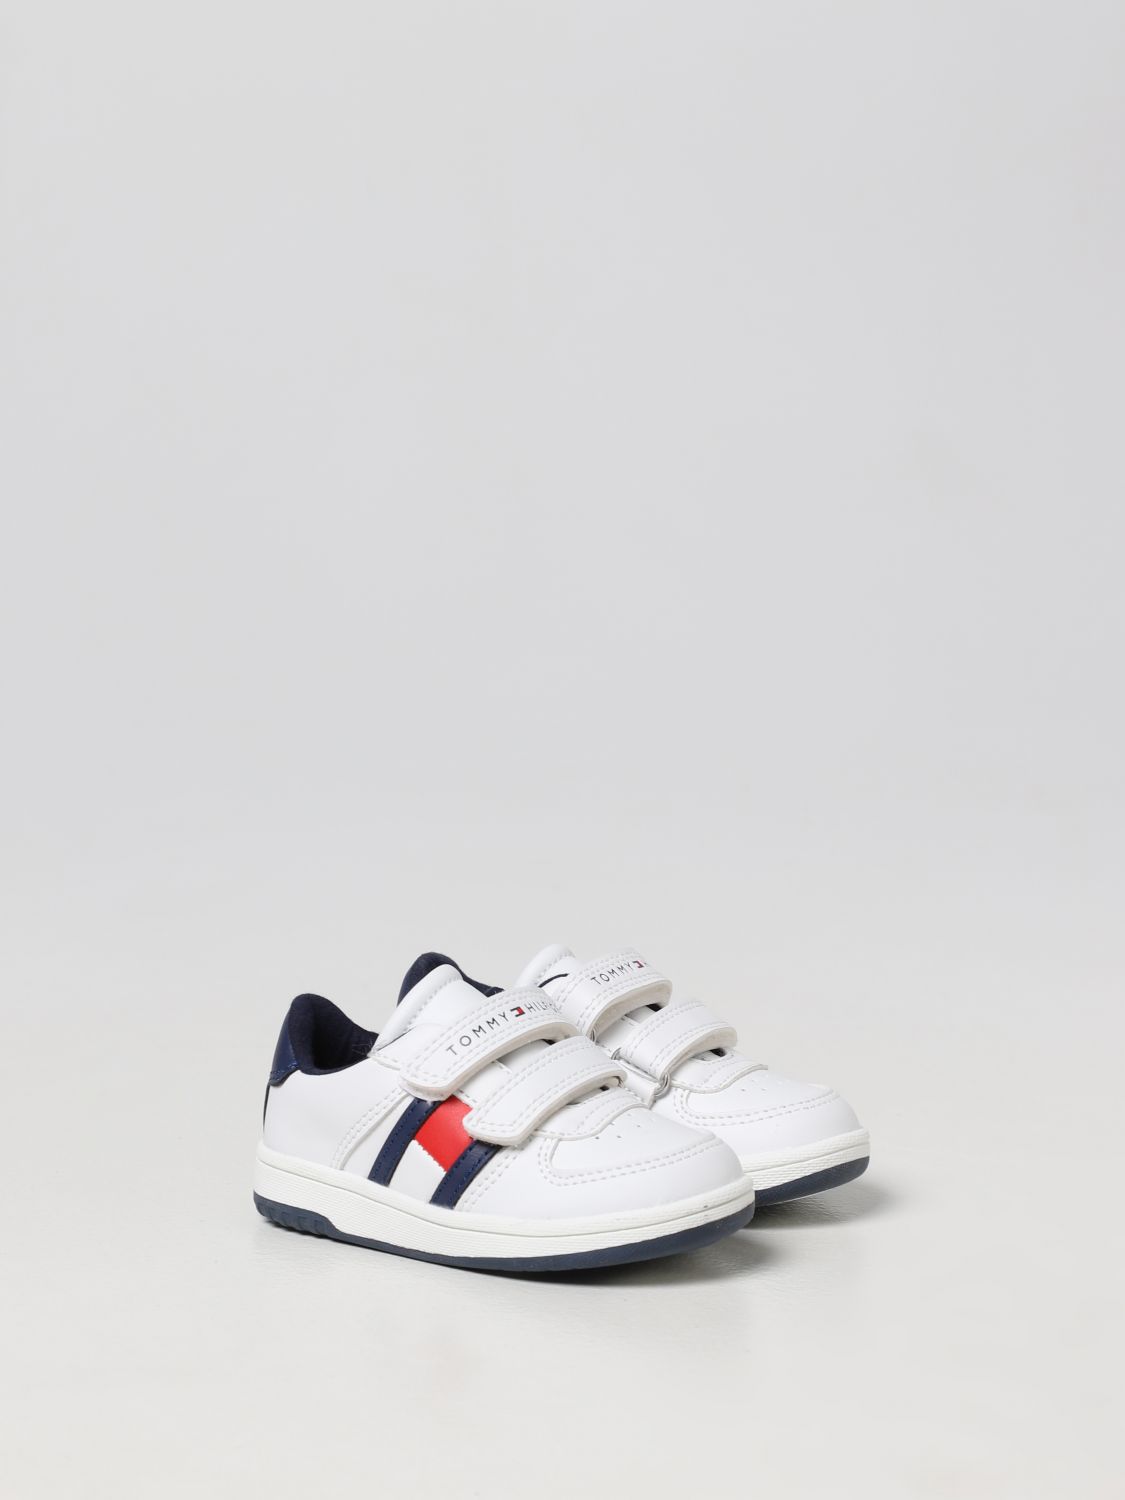 Zapatos Tommy Hilfiger: Zapatos Tommy Hilfiger para niño blanco 2